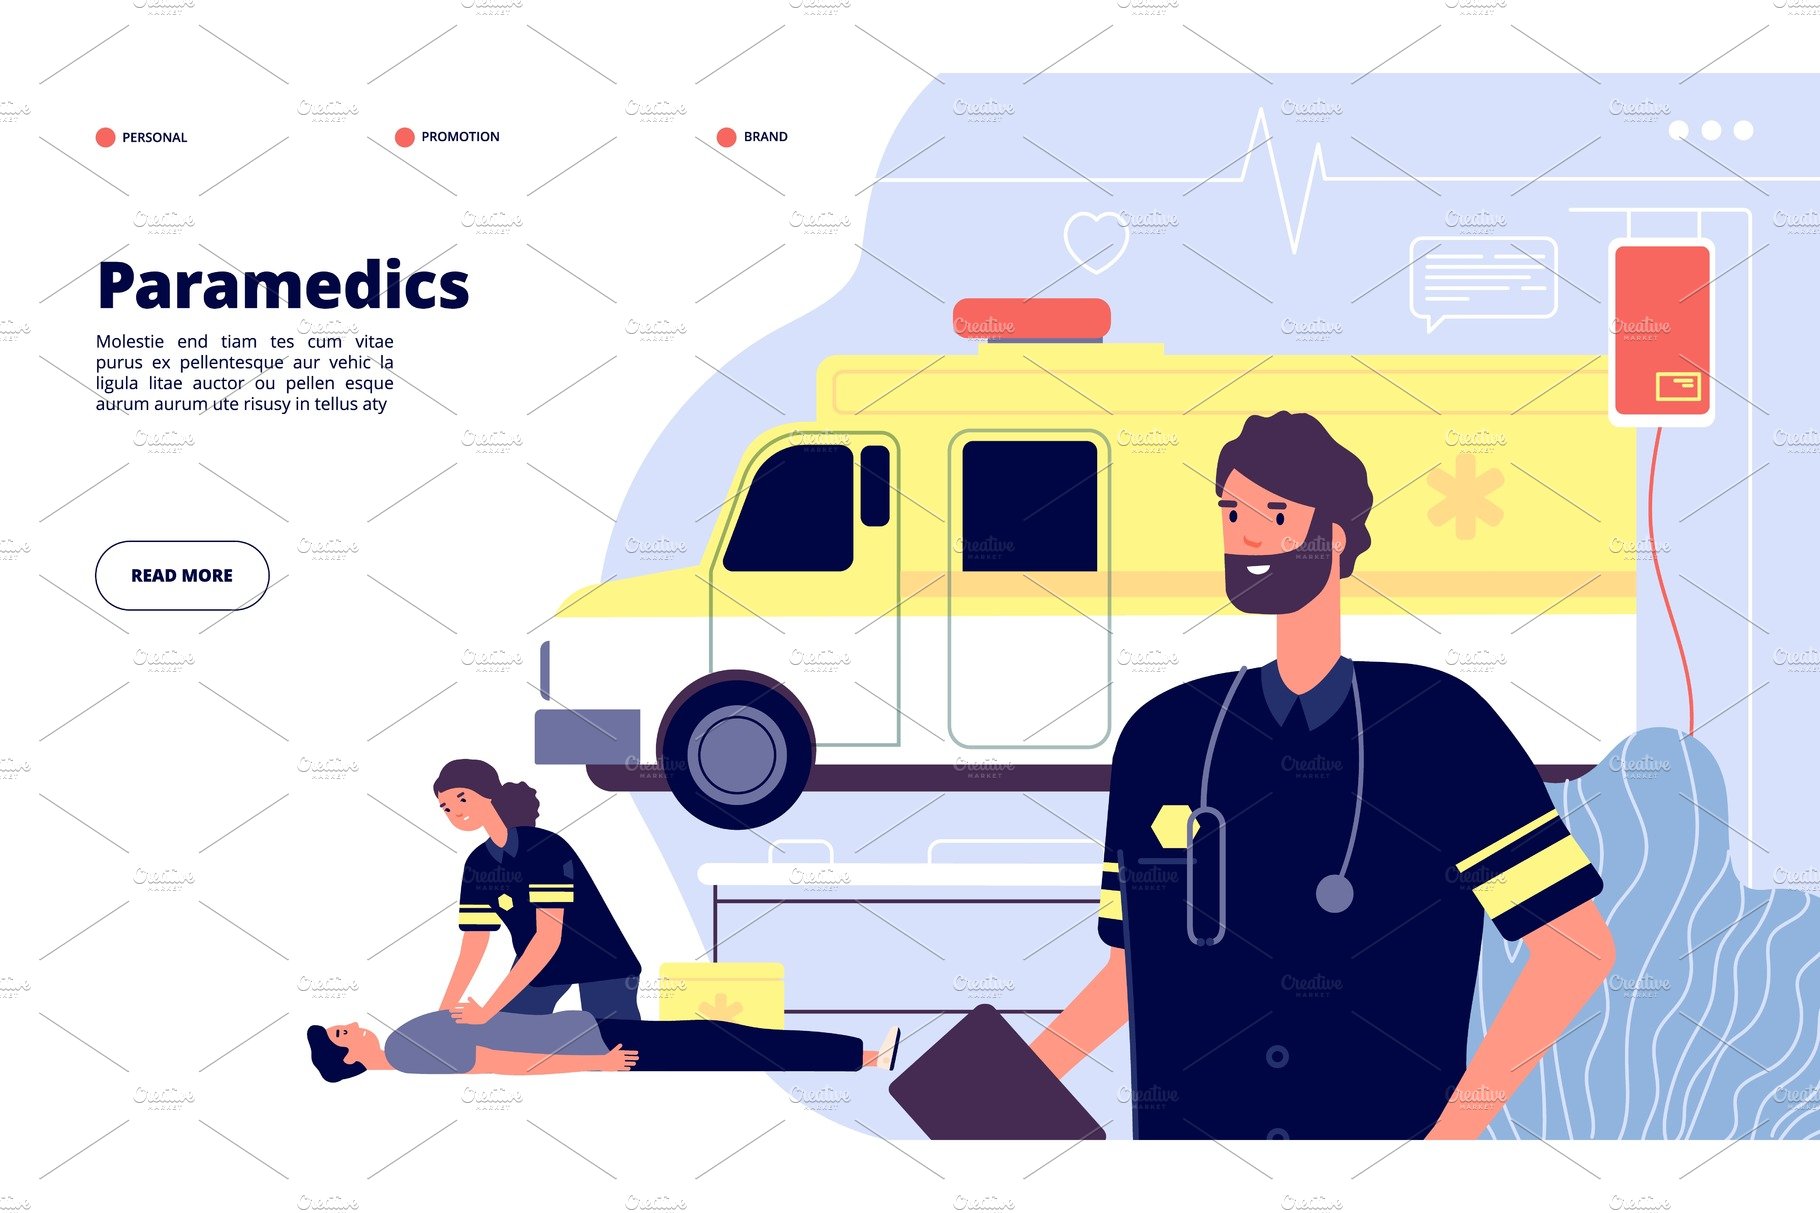 Ambulance service. Paramedic nurses cover image.